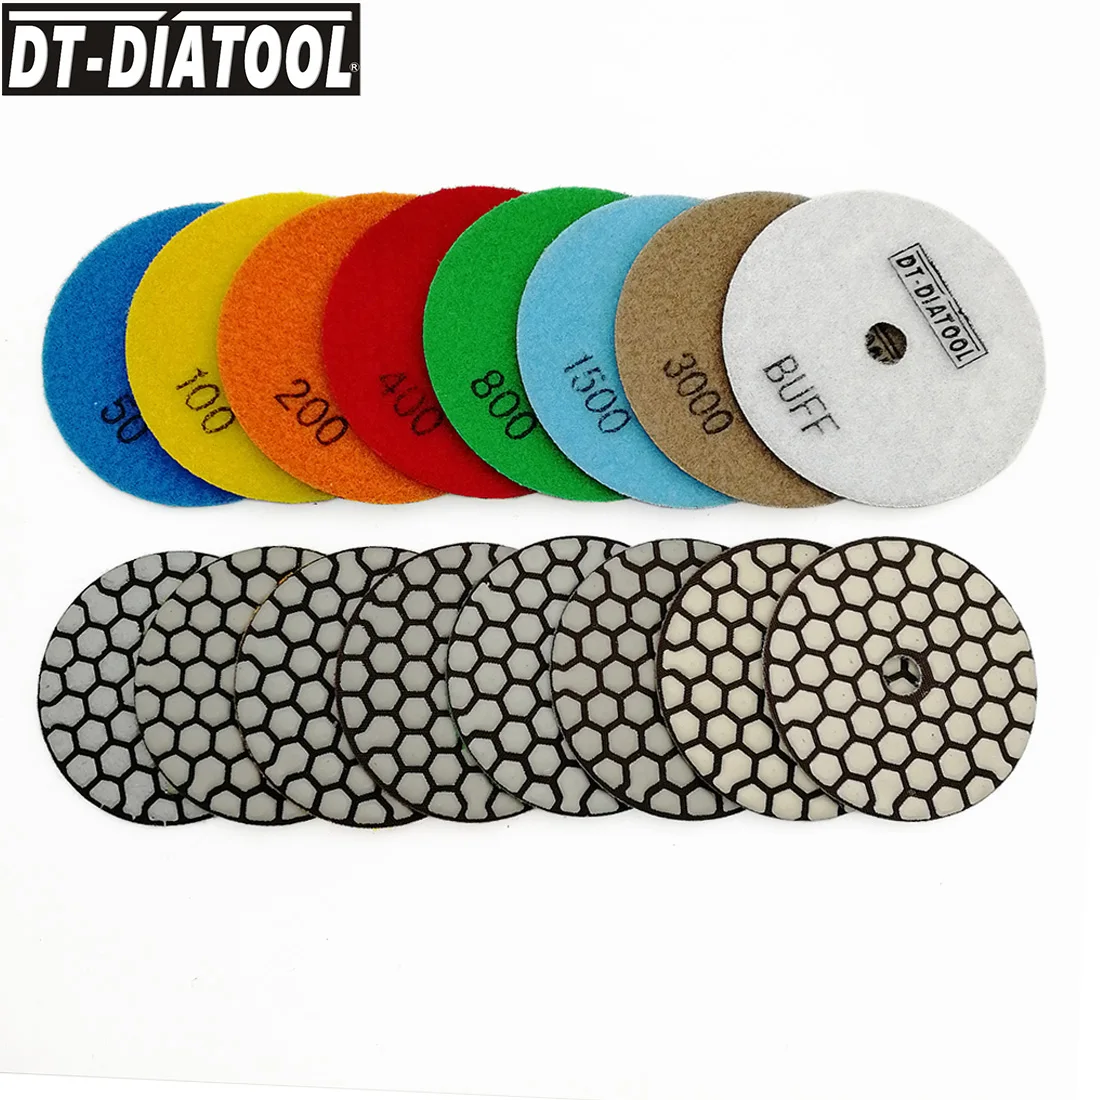 

DT-DIATOOL 8pcs/Set 3"/4" Dry Diamond Polishing Pads Sanding Discs for Granite Marble Concrete Stone Grinding Discs Hand Tools